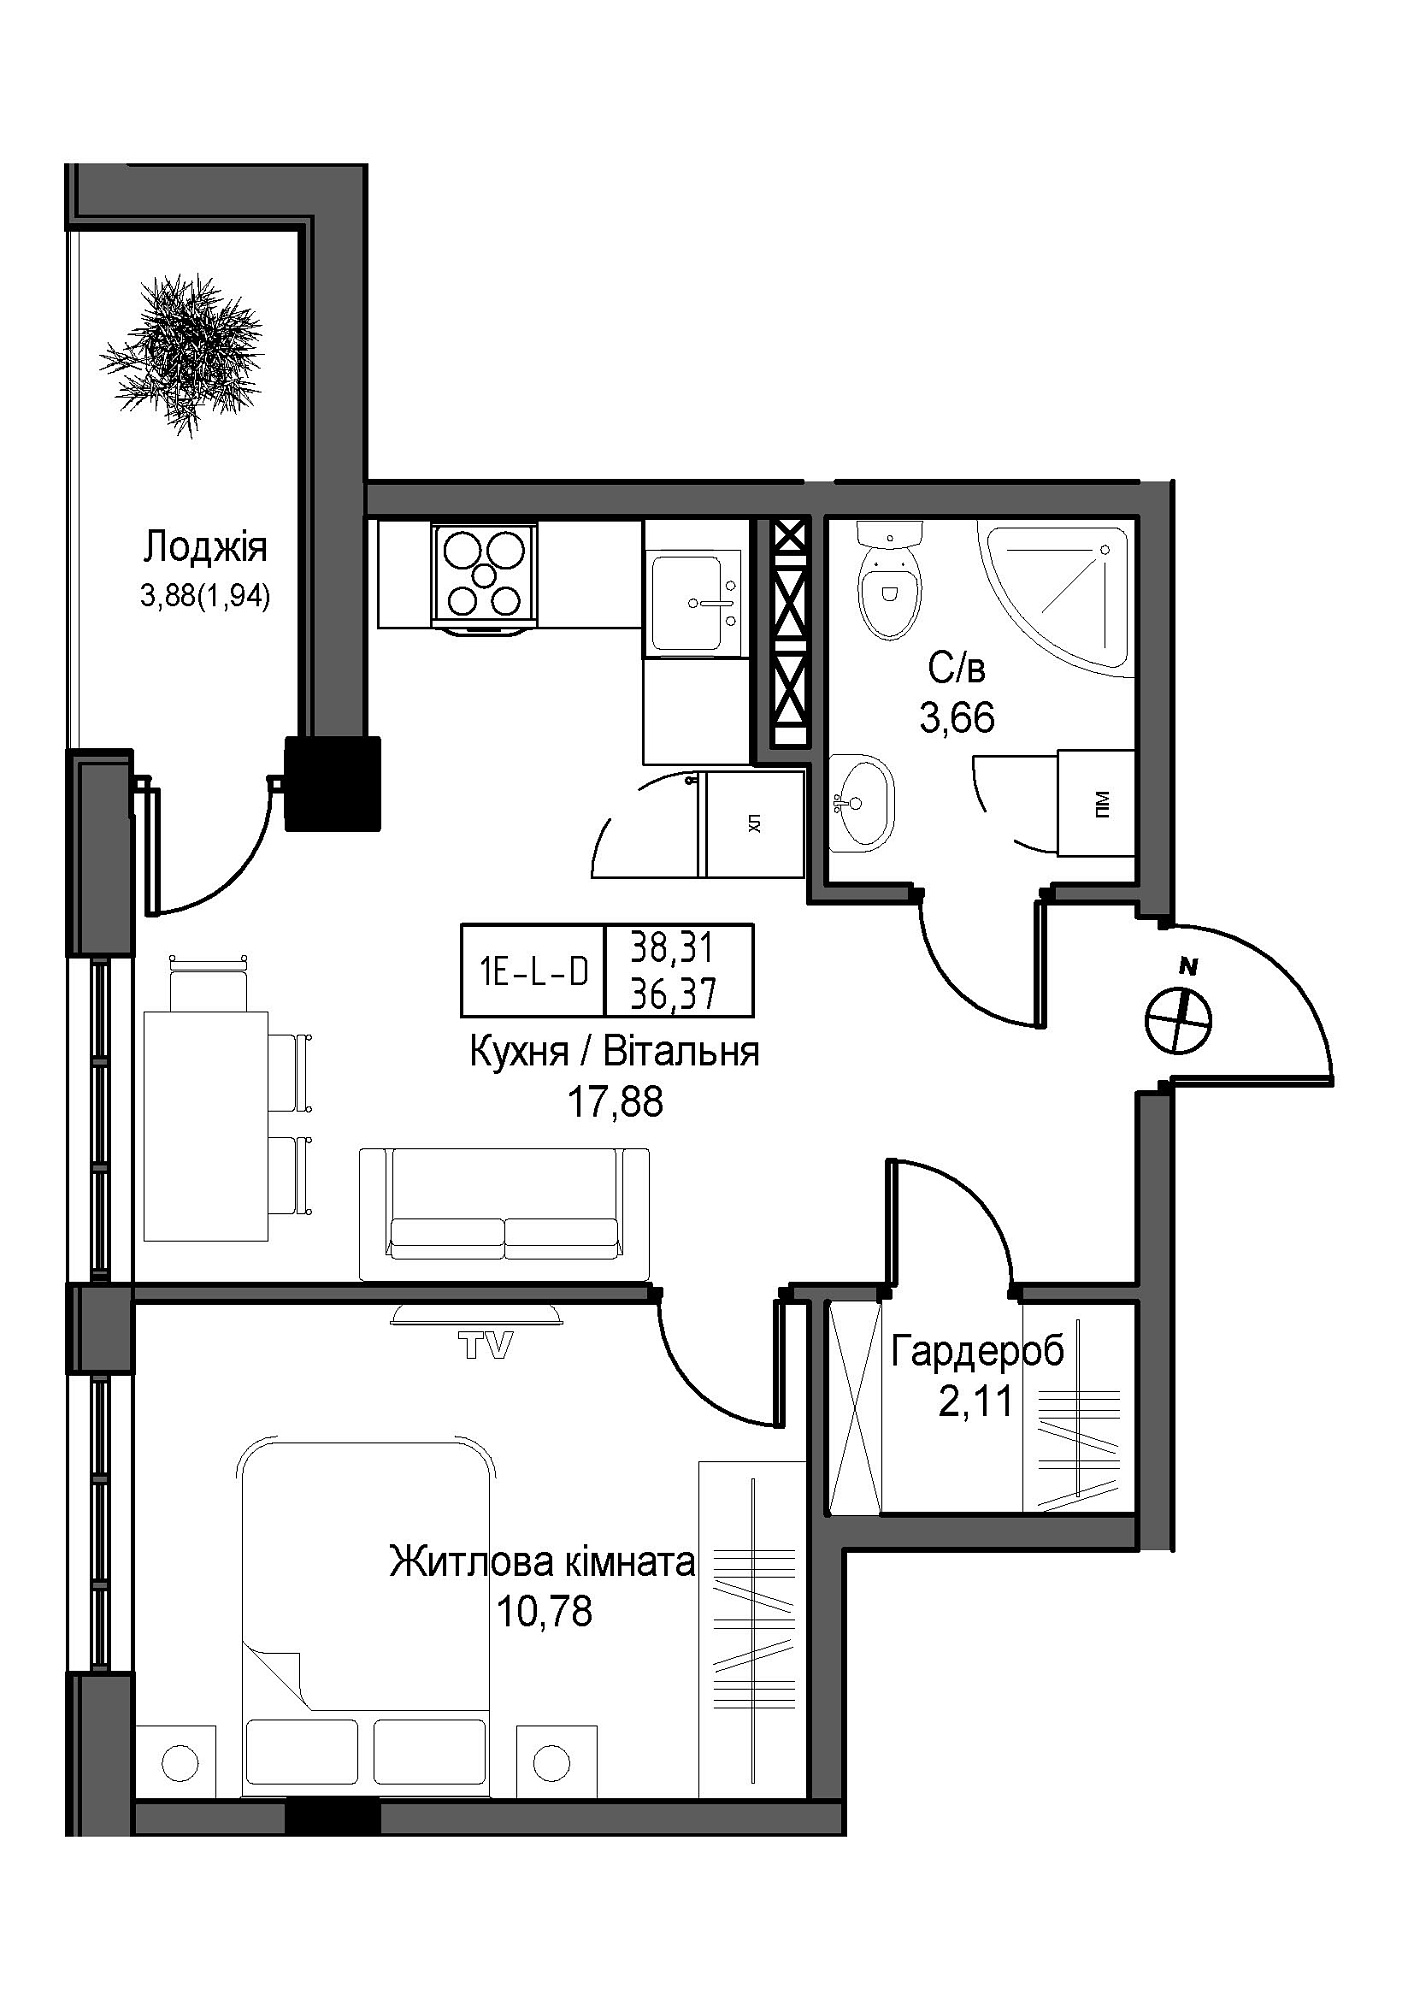 Планування 1-к квартира площею 36.37м2, UM-007-06/0011.